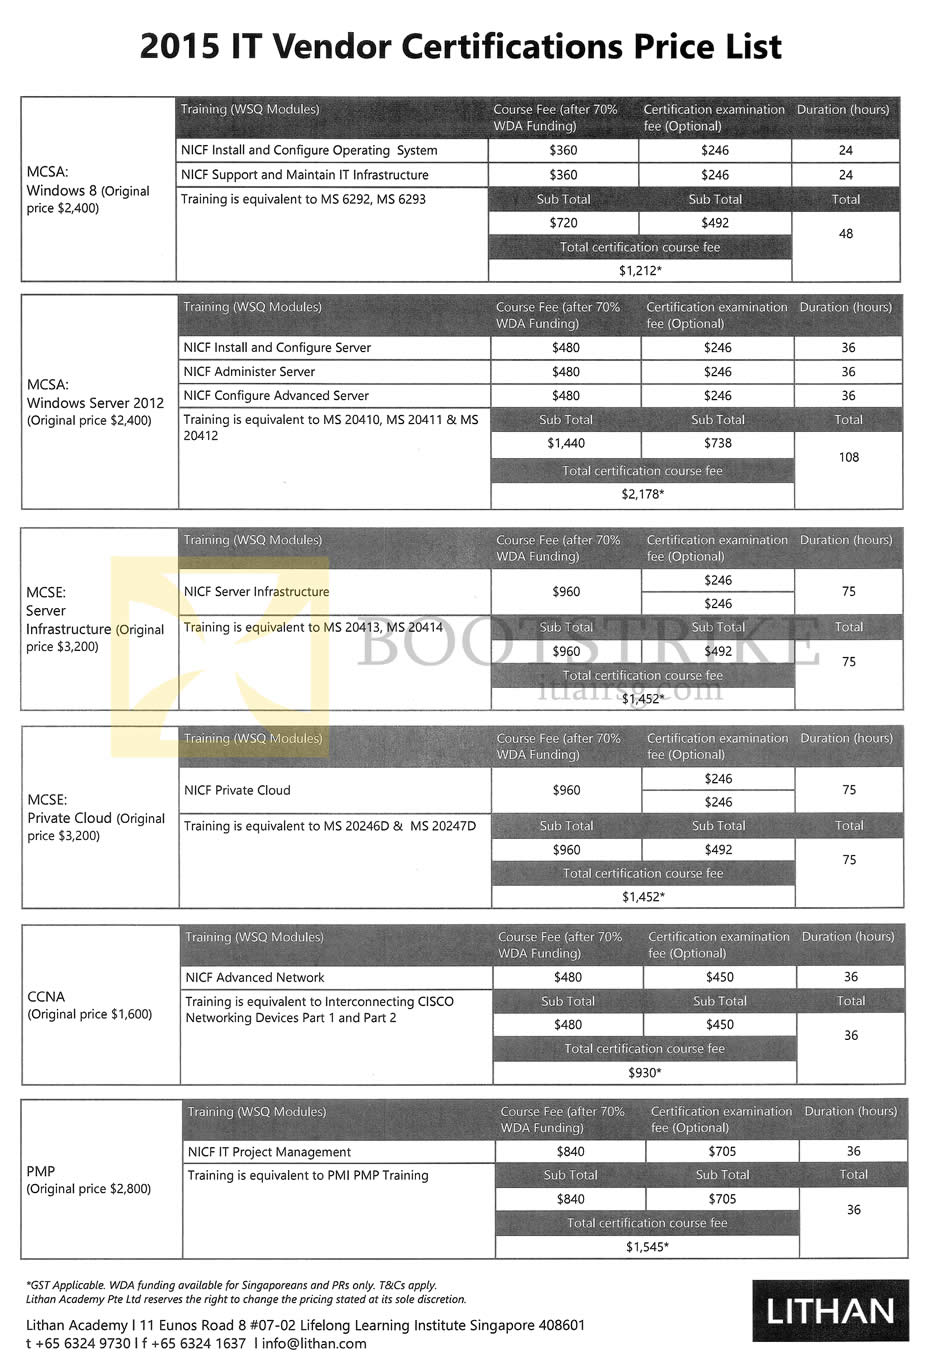 COMEX 2015 price list image brochure of Lithan Academy IT Vendor Certifications, MCSE, CCNA, MCSA